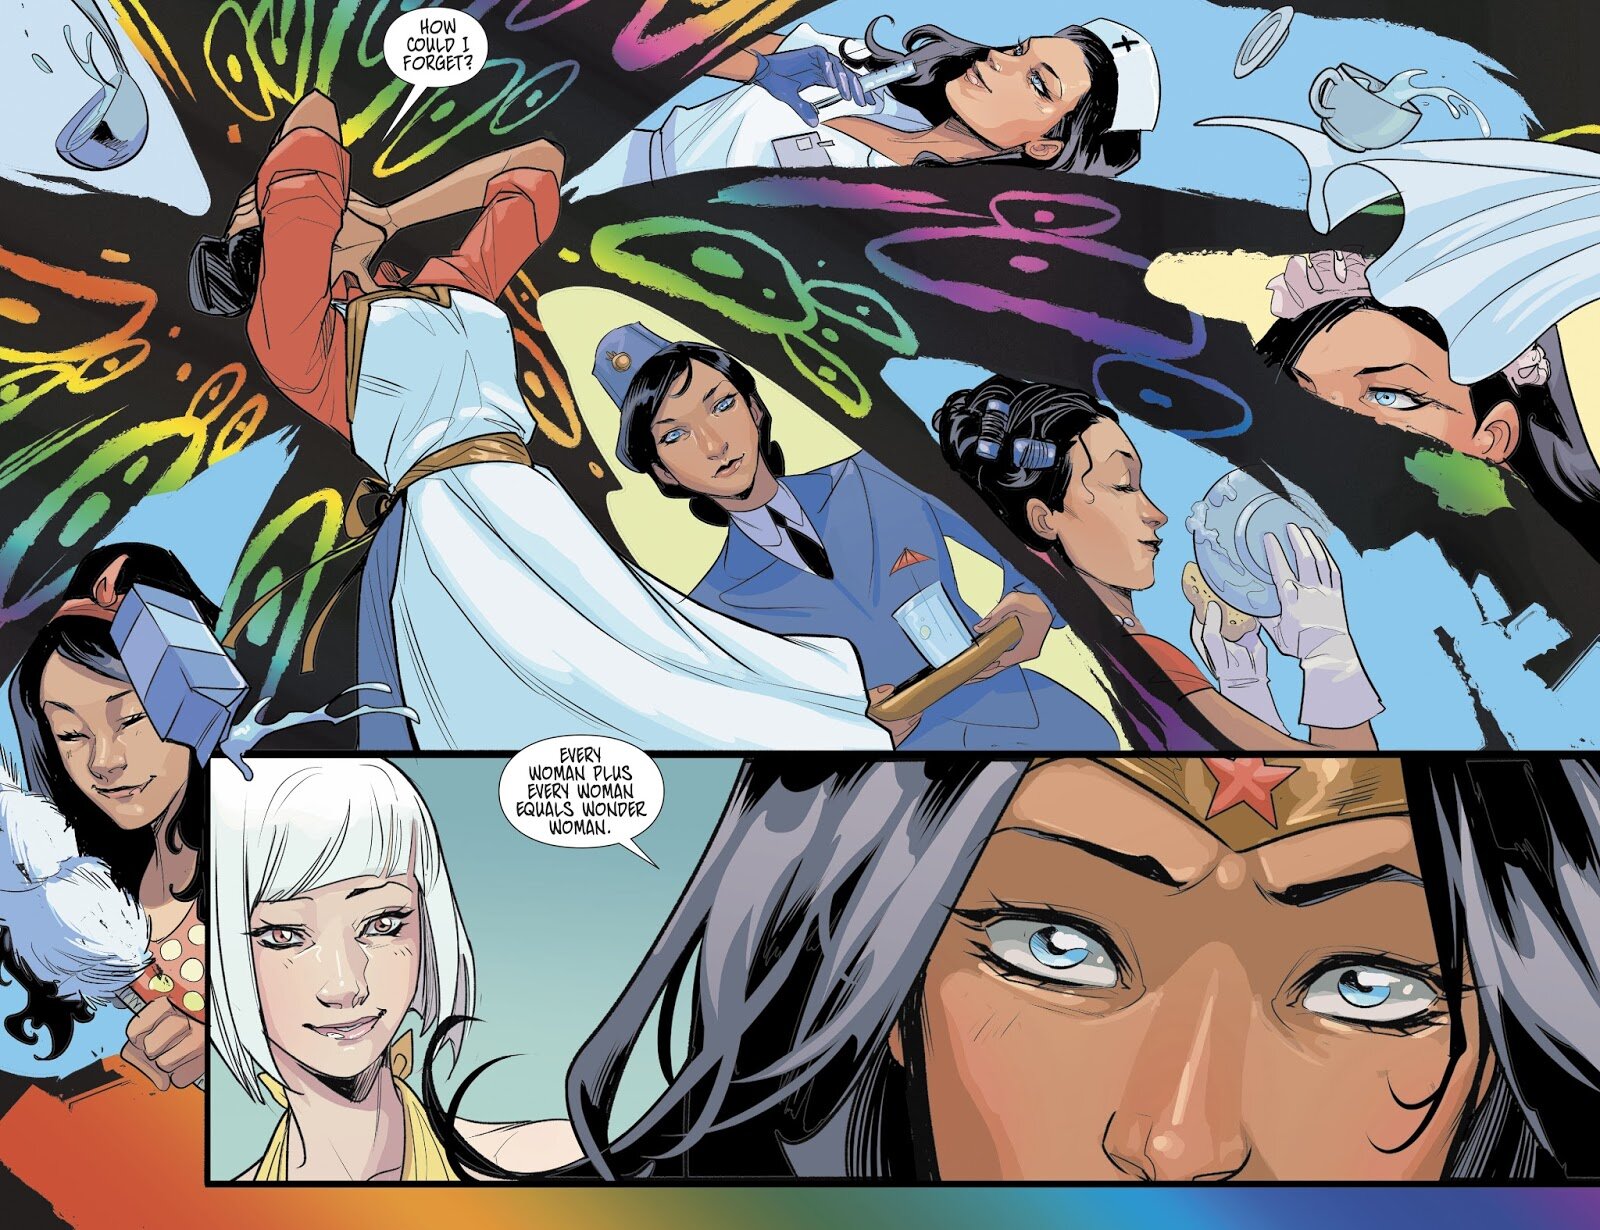 Comics CB12964 Shade the Changing Girl Wonder Woman #1  D.C 